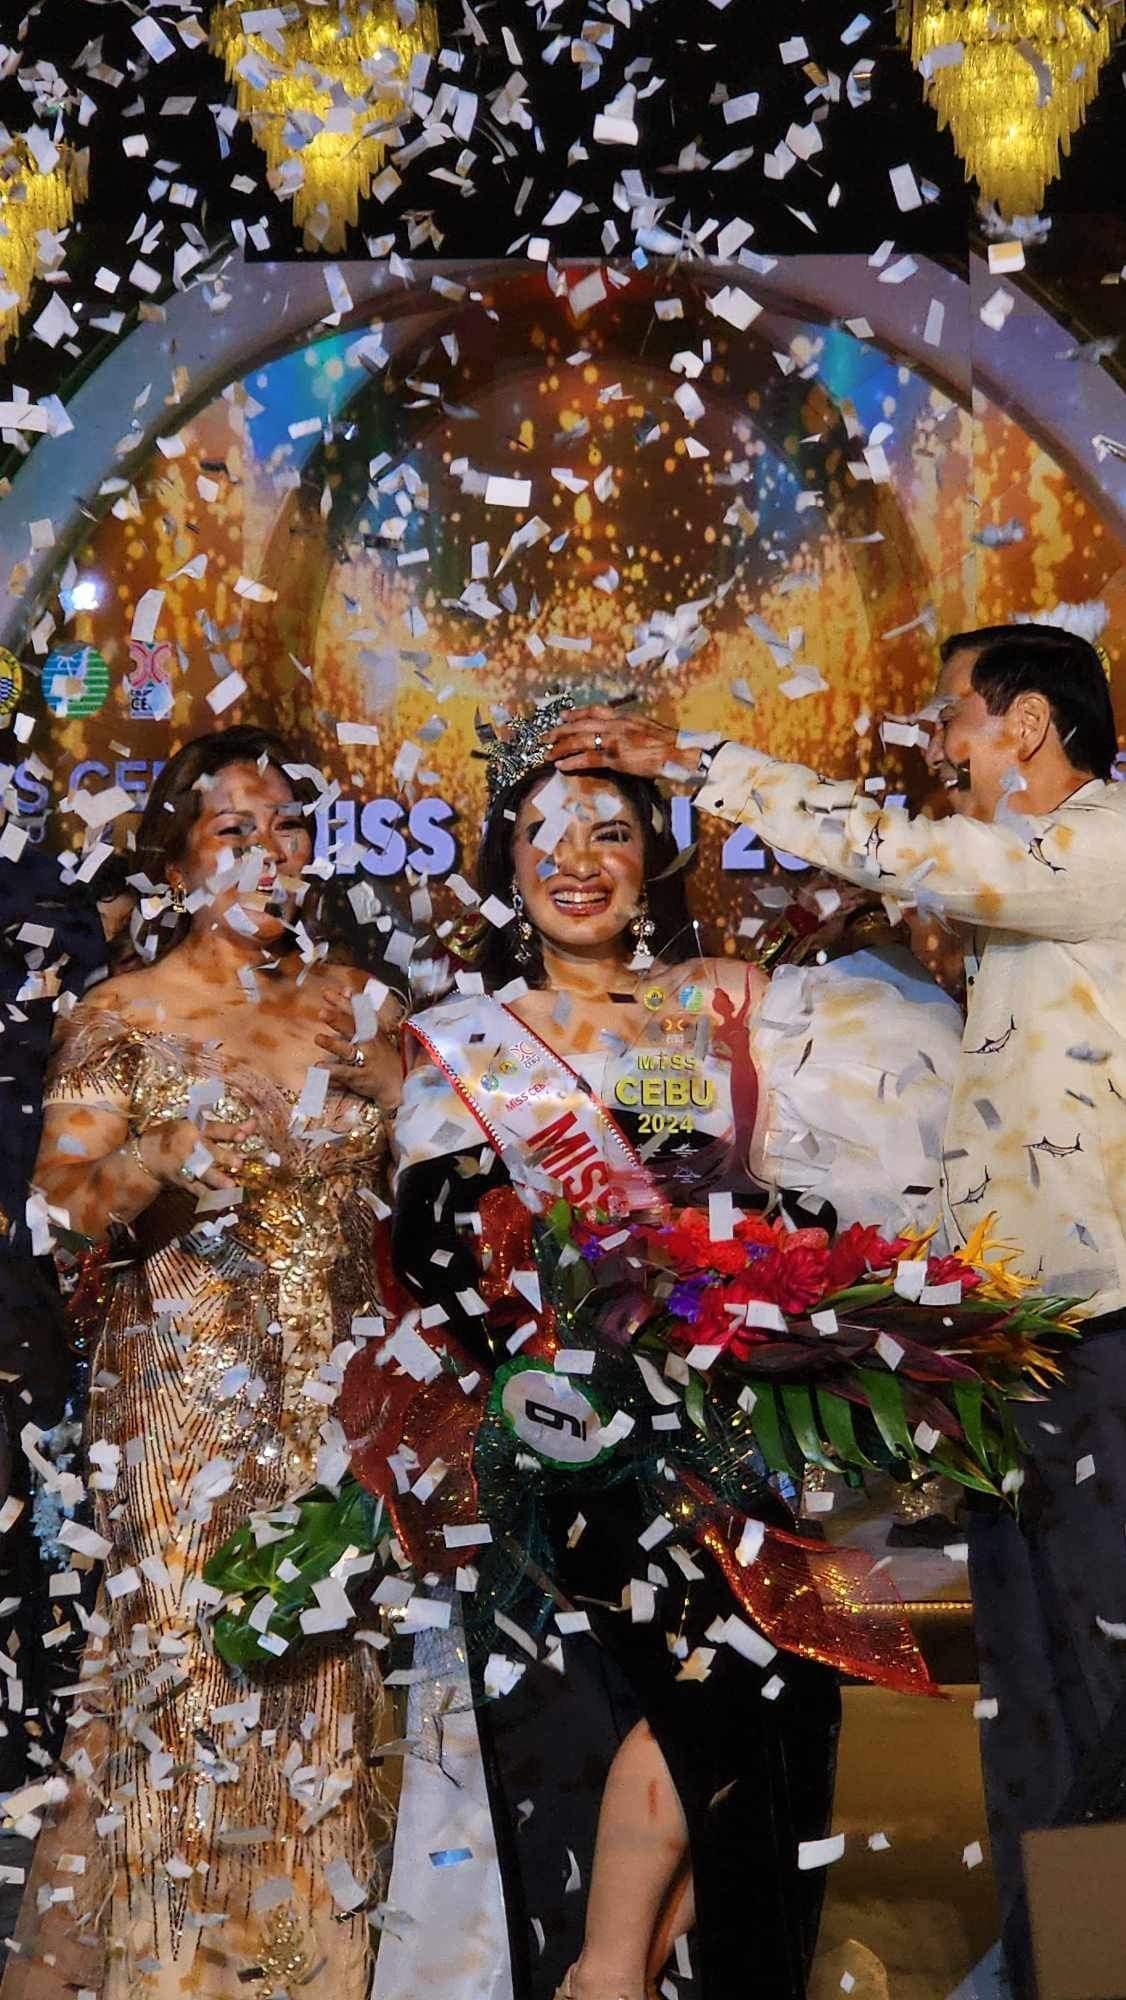 Zoe Camerons triumph as Miss Cebu 2024 illuminates a night of elegance and impact